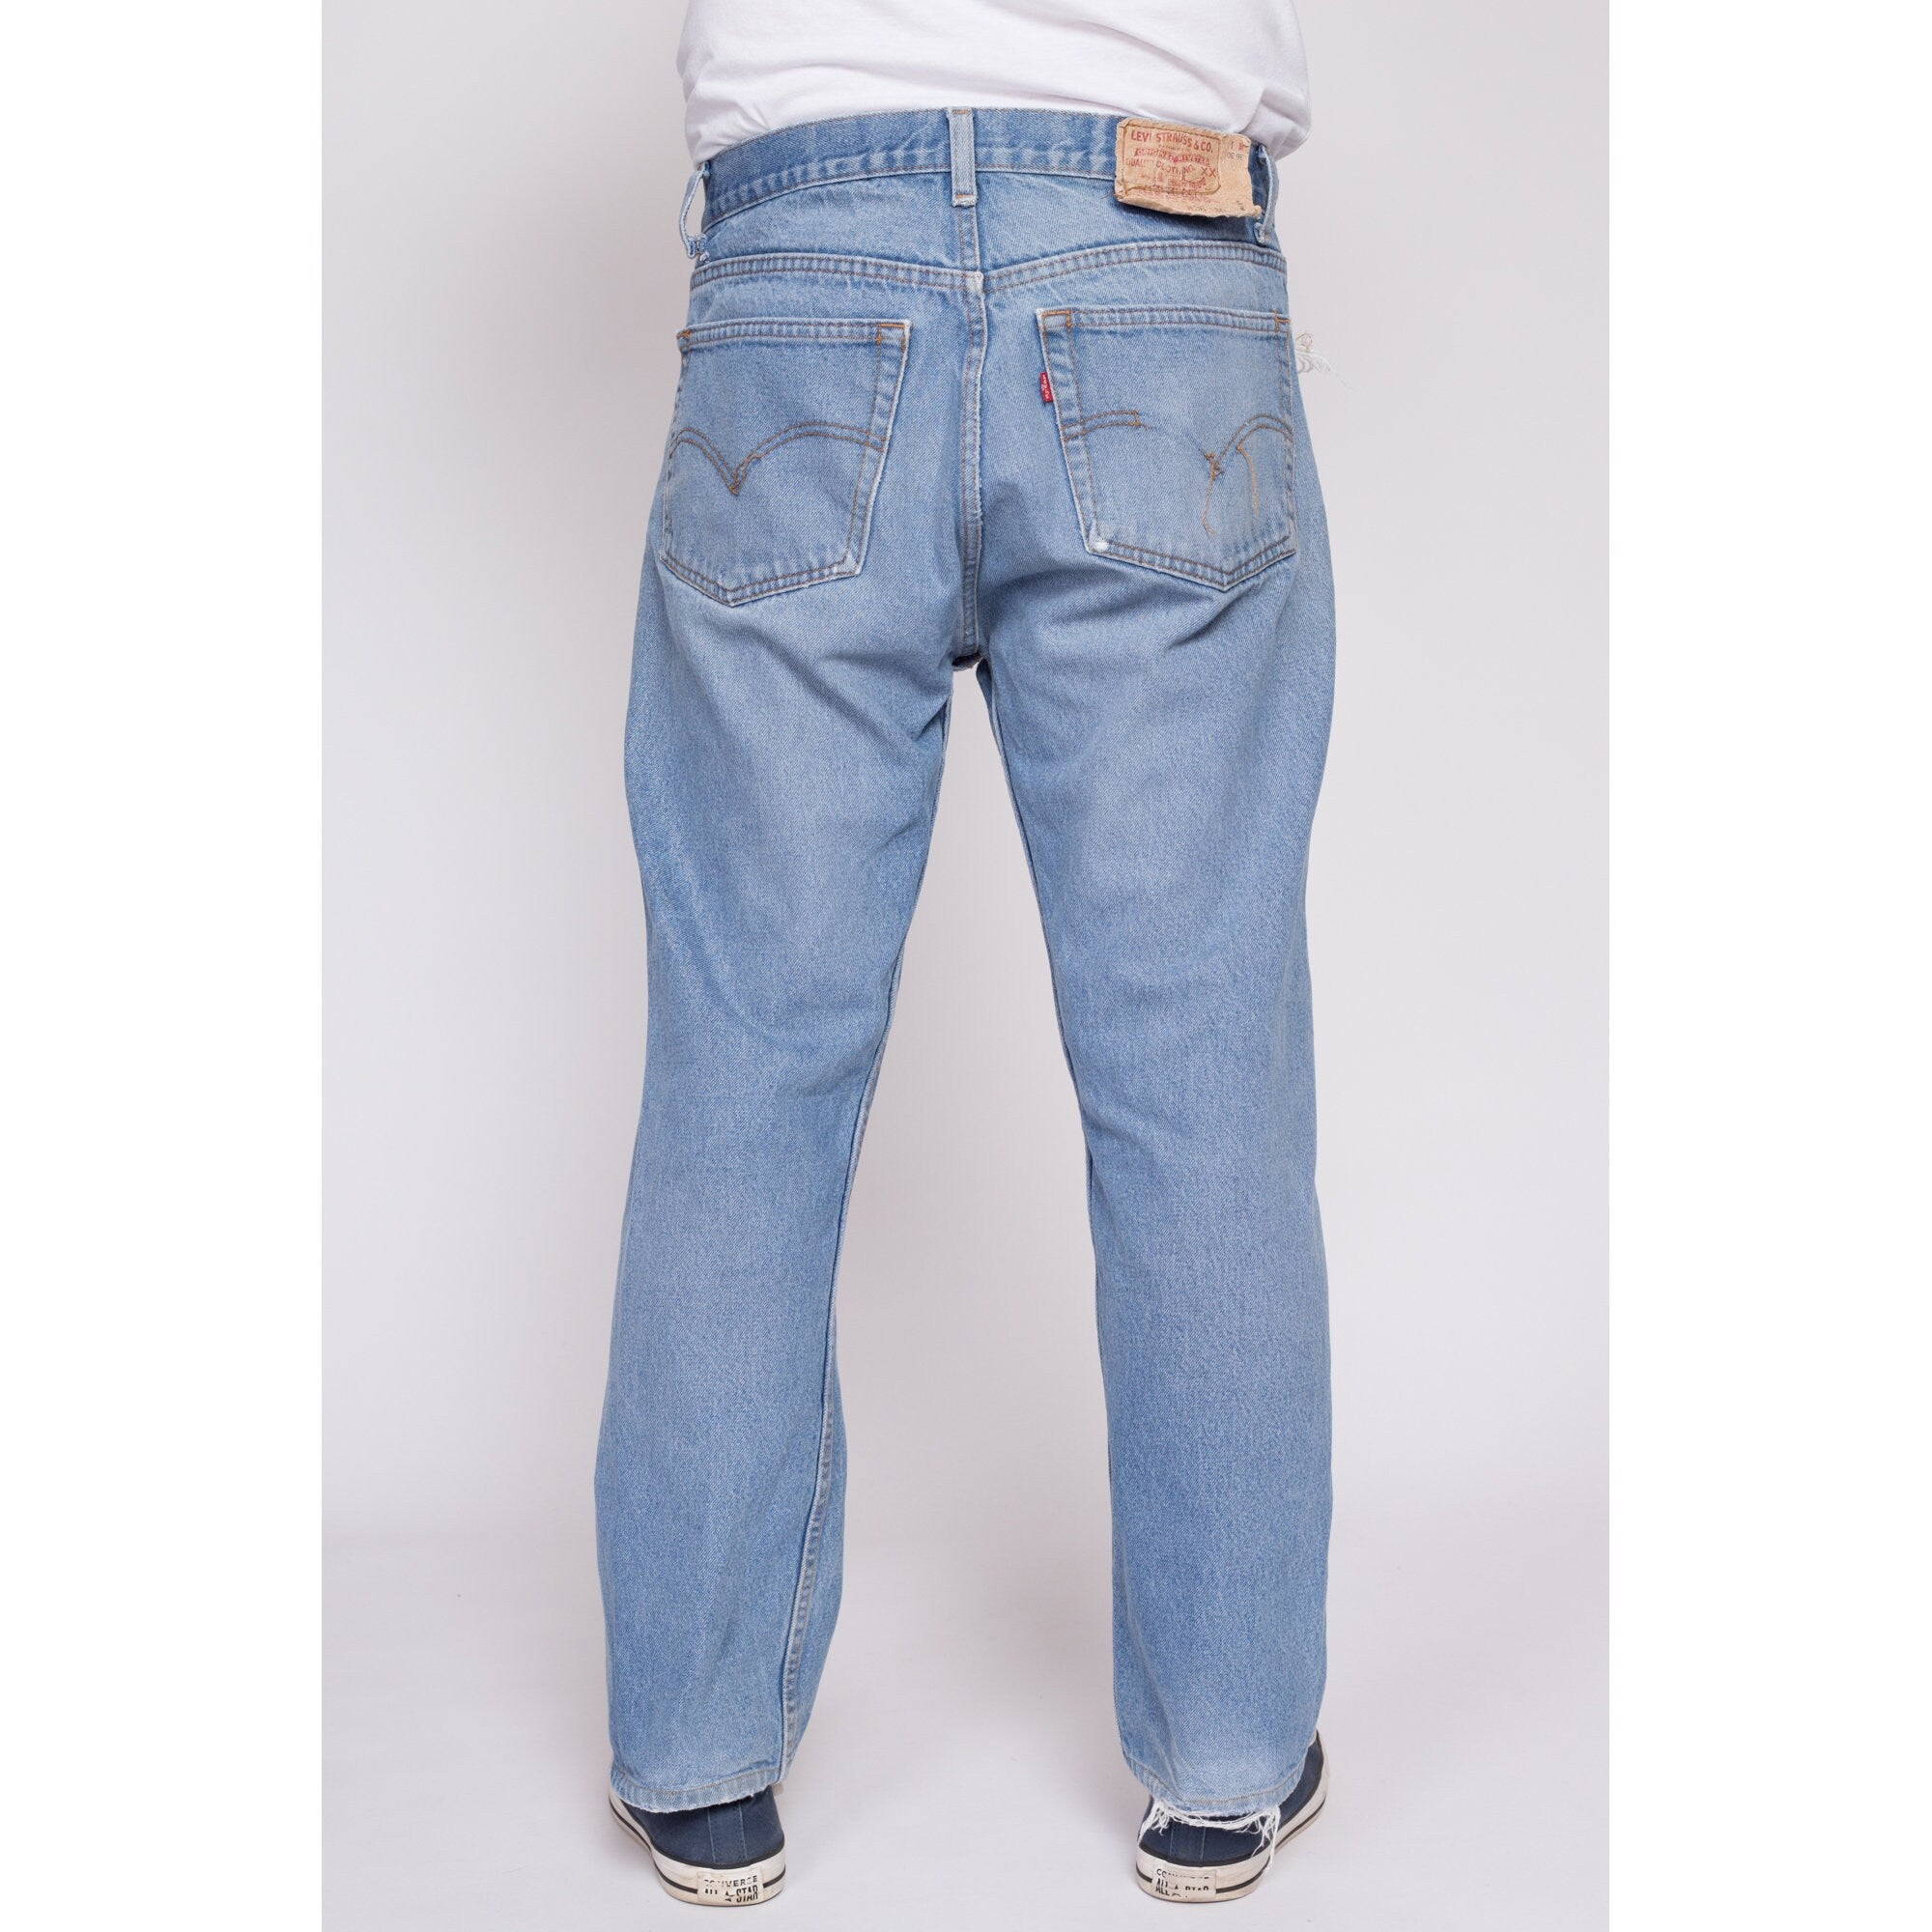 Vintage Levi Strauss & Co Acid Wash Denim Jeans Size 34 X 32 506